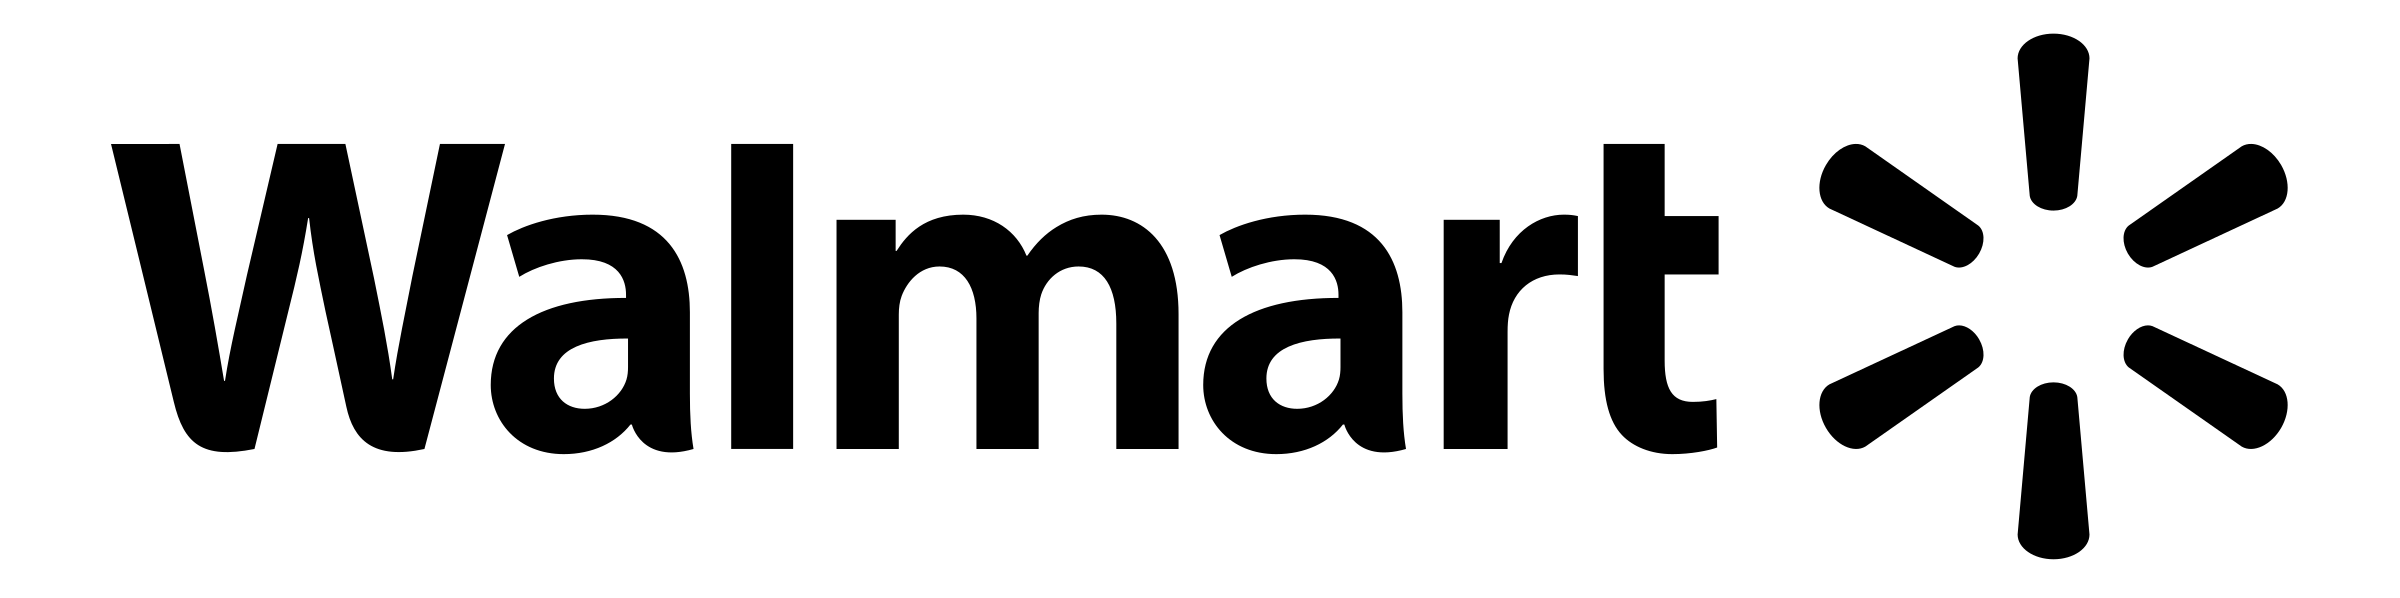 walmart-logo-black-transparent.png